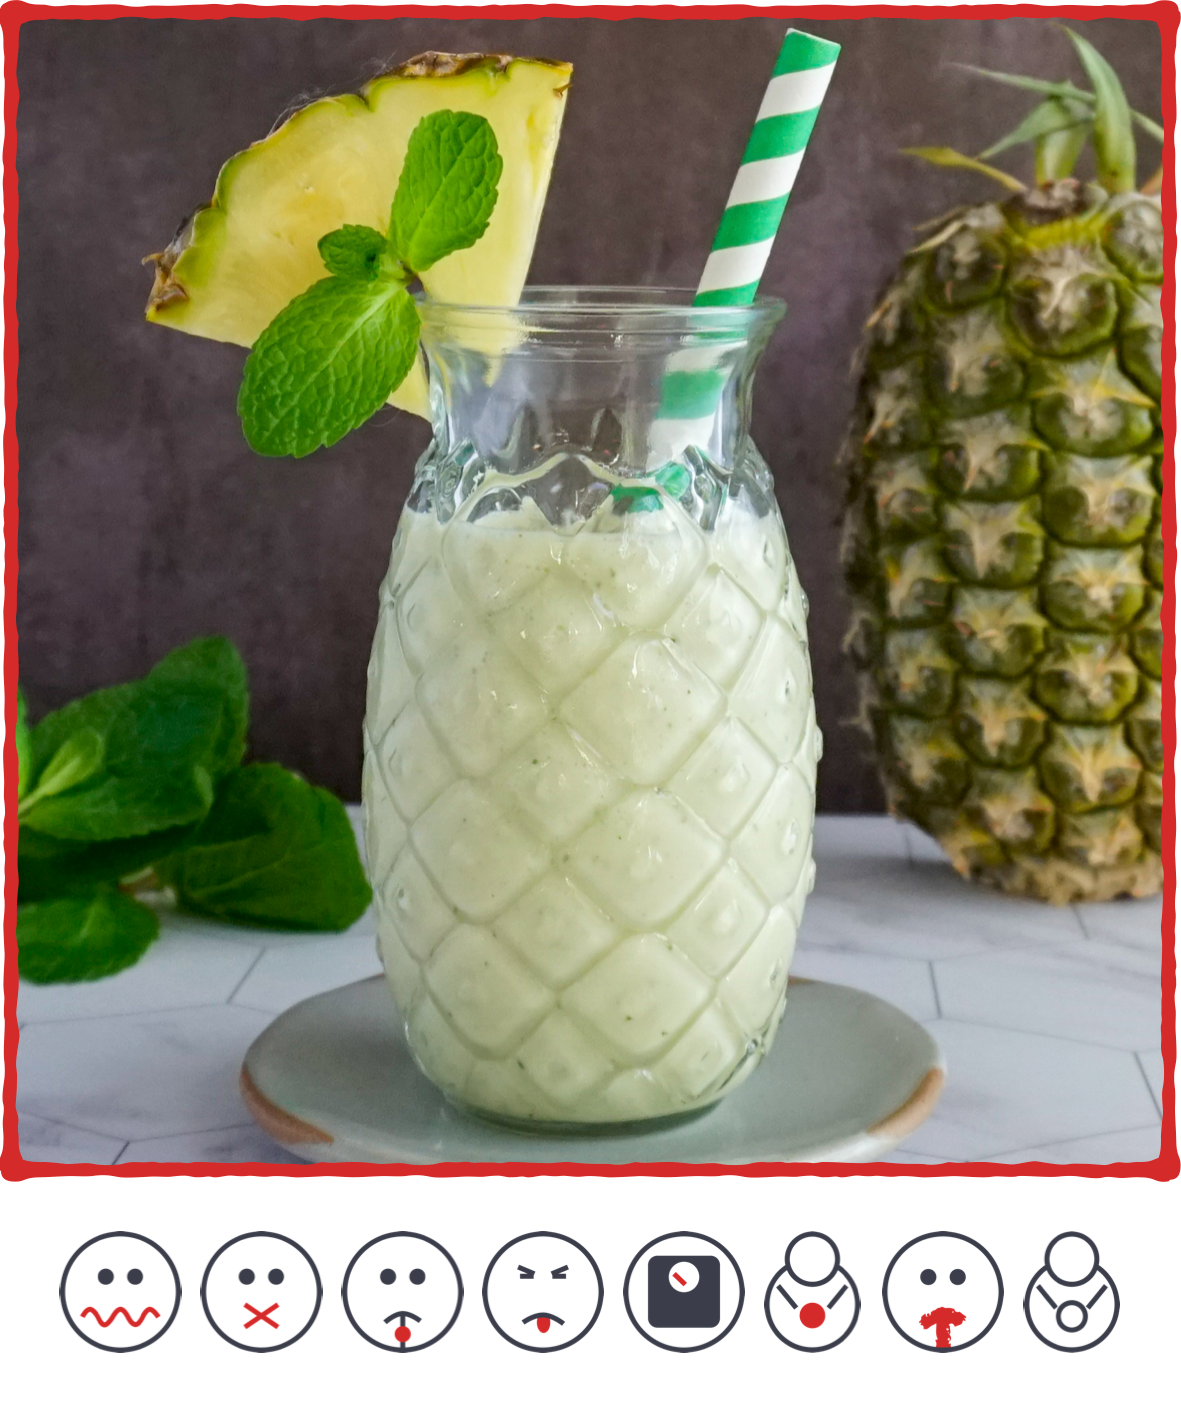 Pineapple Smoothie